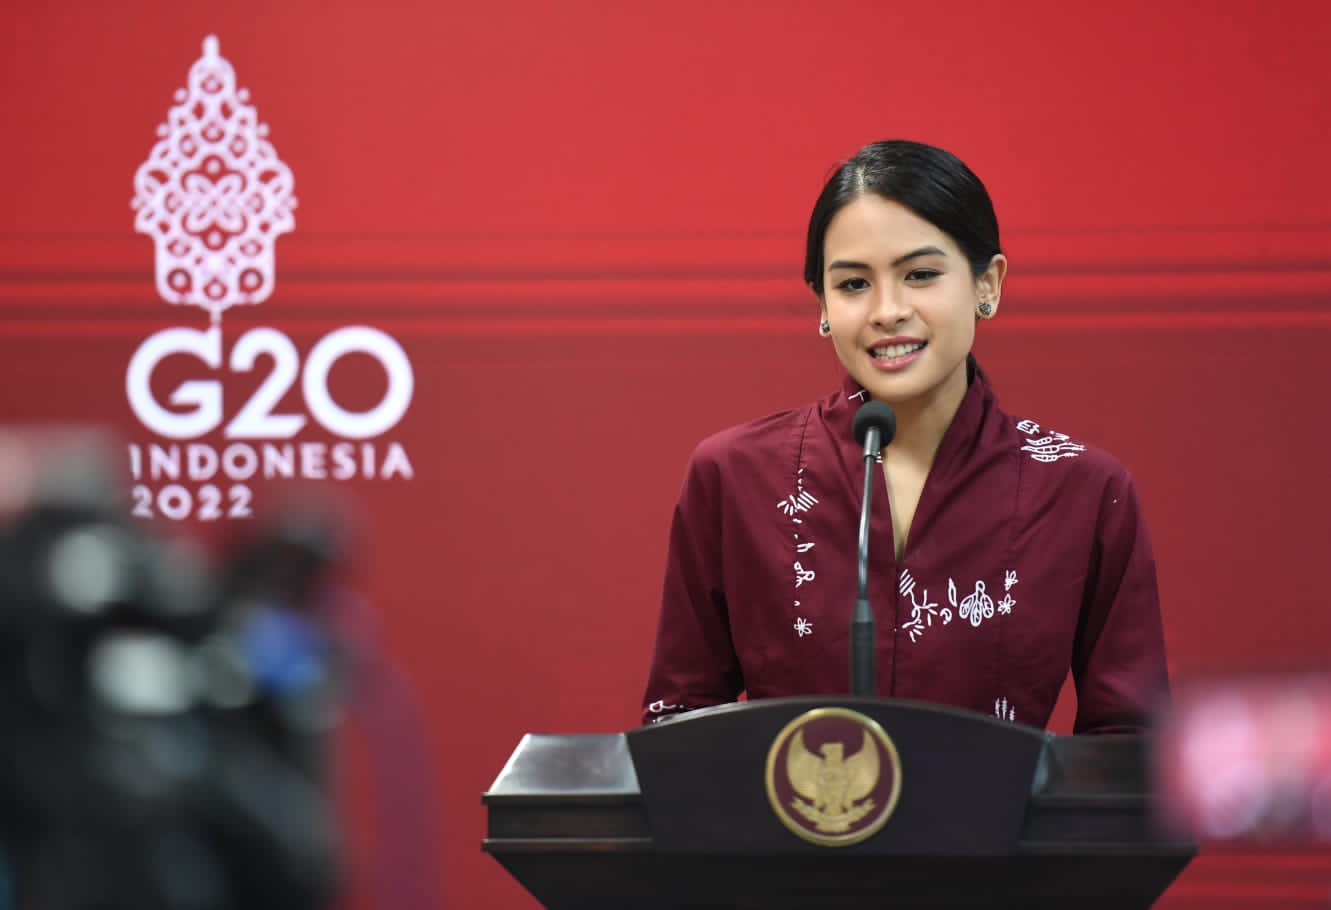 Maudy Ayunda Sebut Transisi Energi Jadi Isu Prioritas Presidensi G20 Indonesia